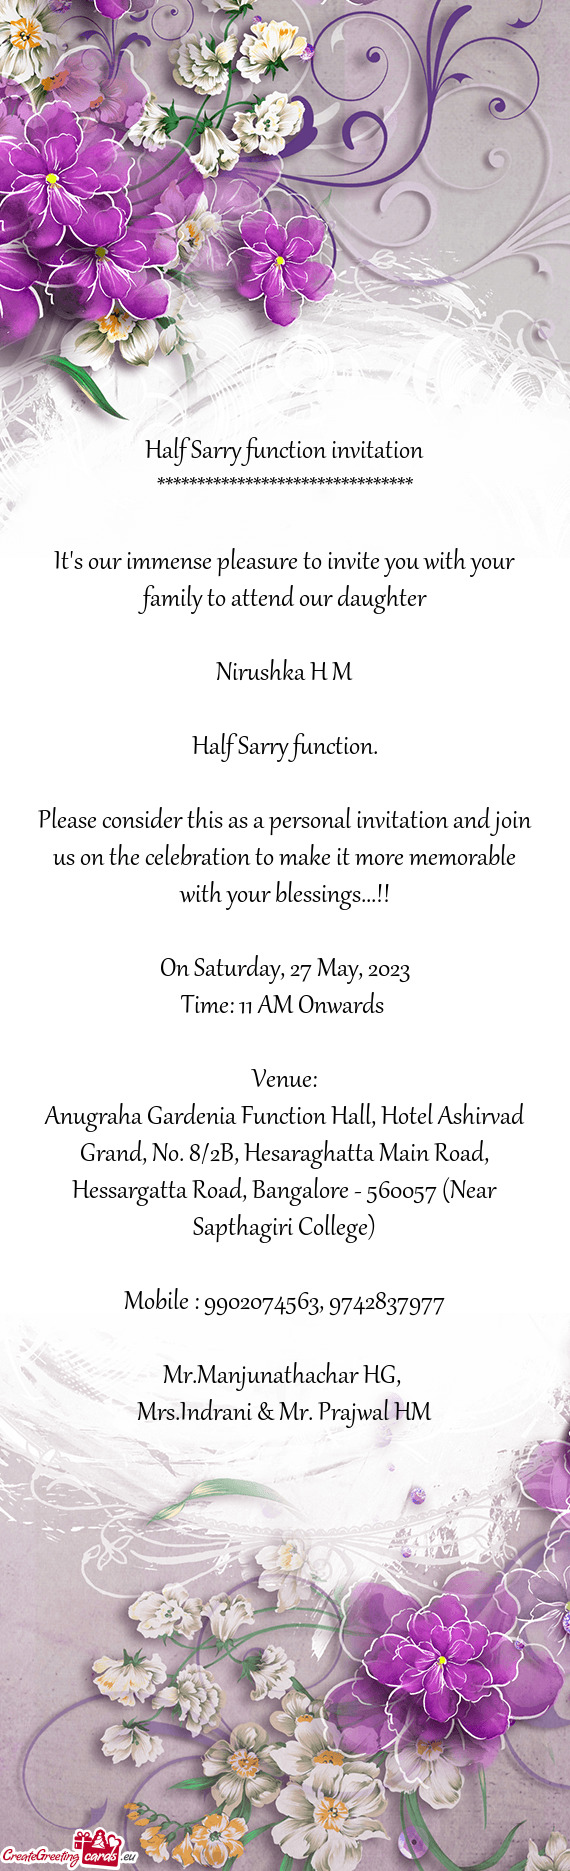 Half Sarry function invitation